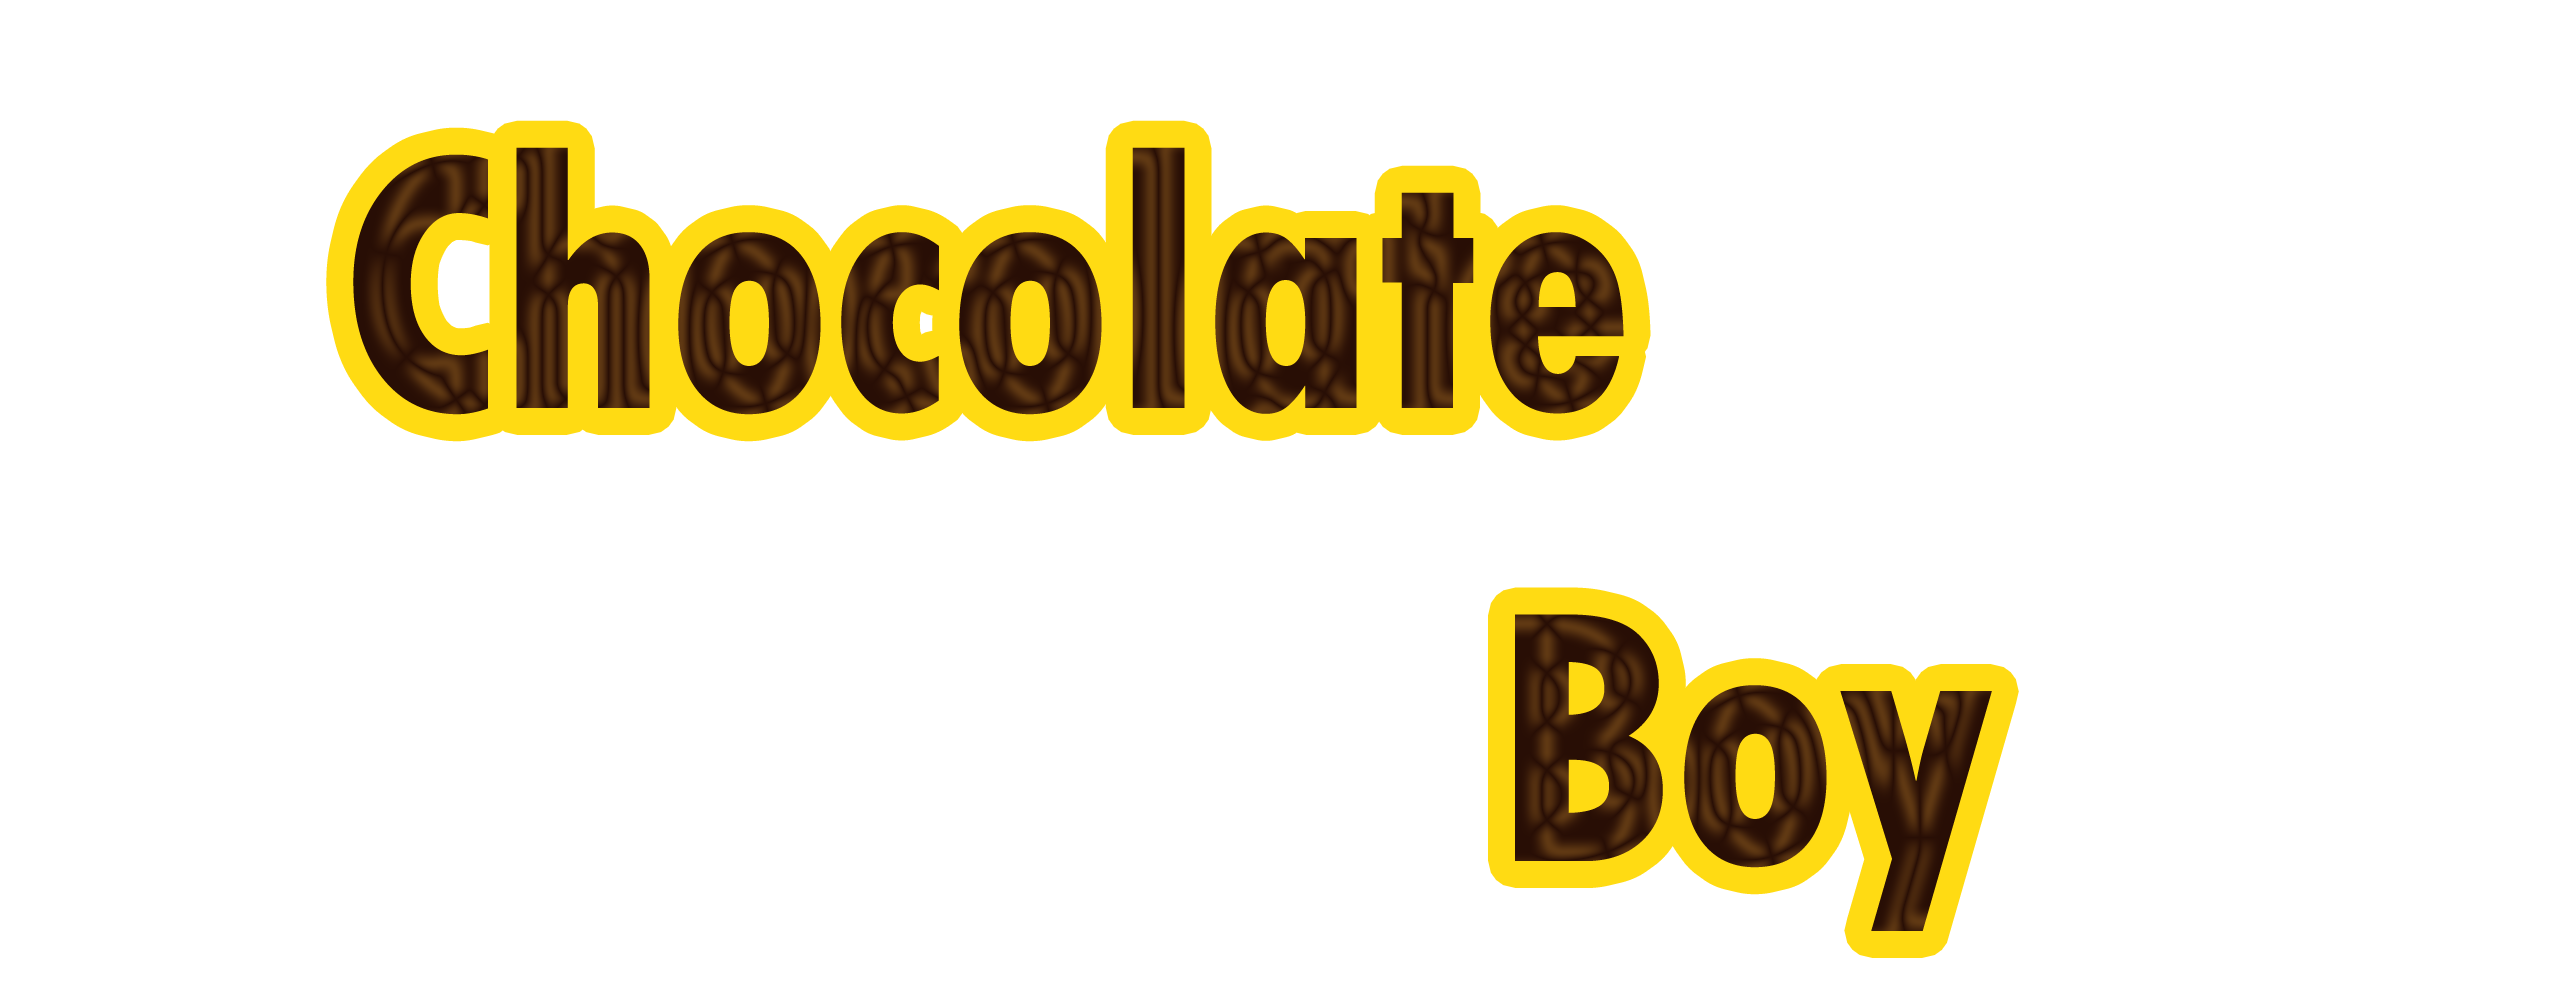 Chocolate Boy #11